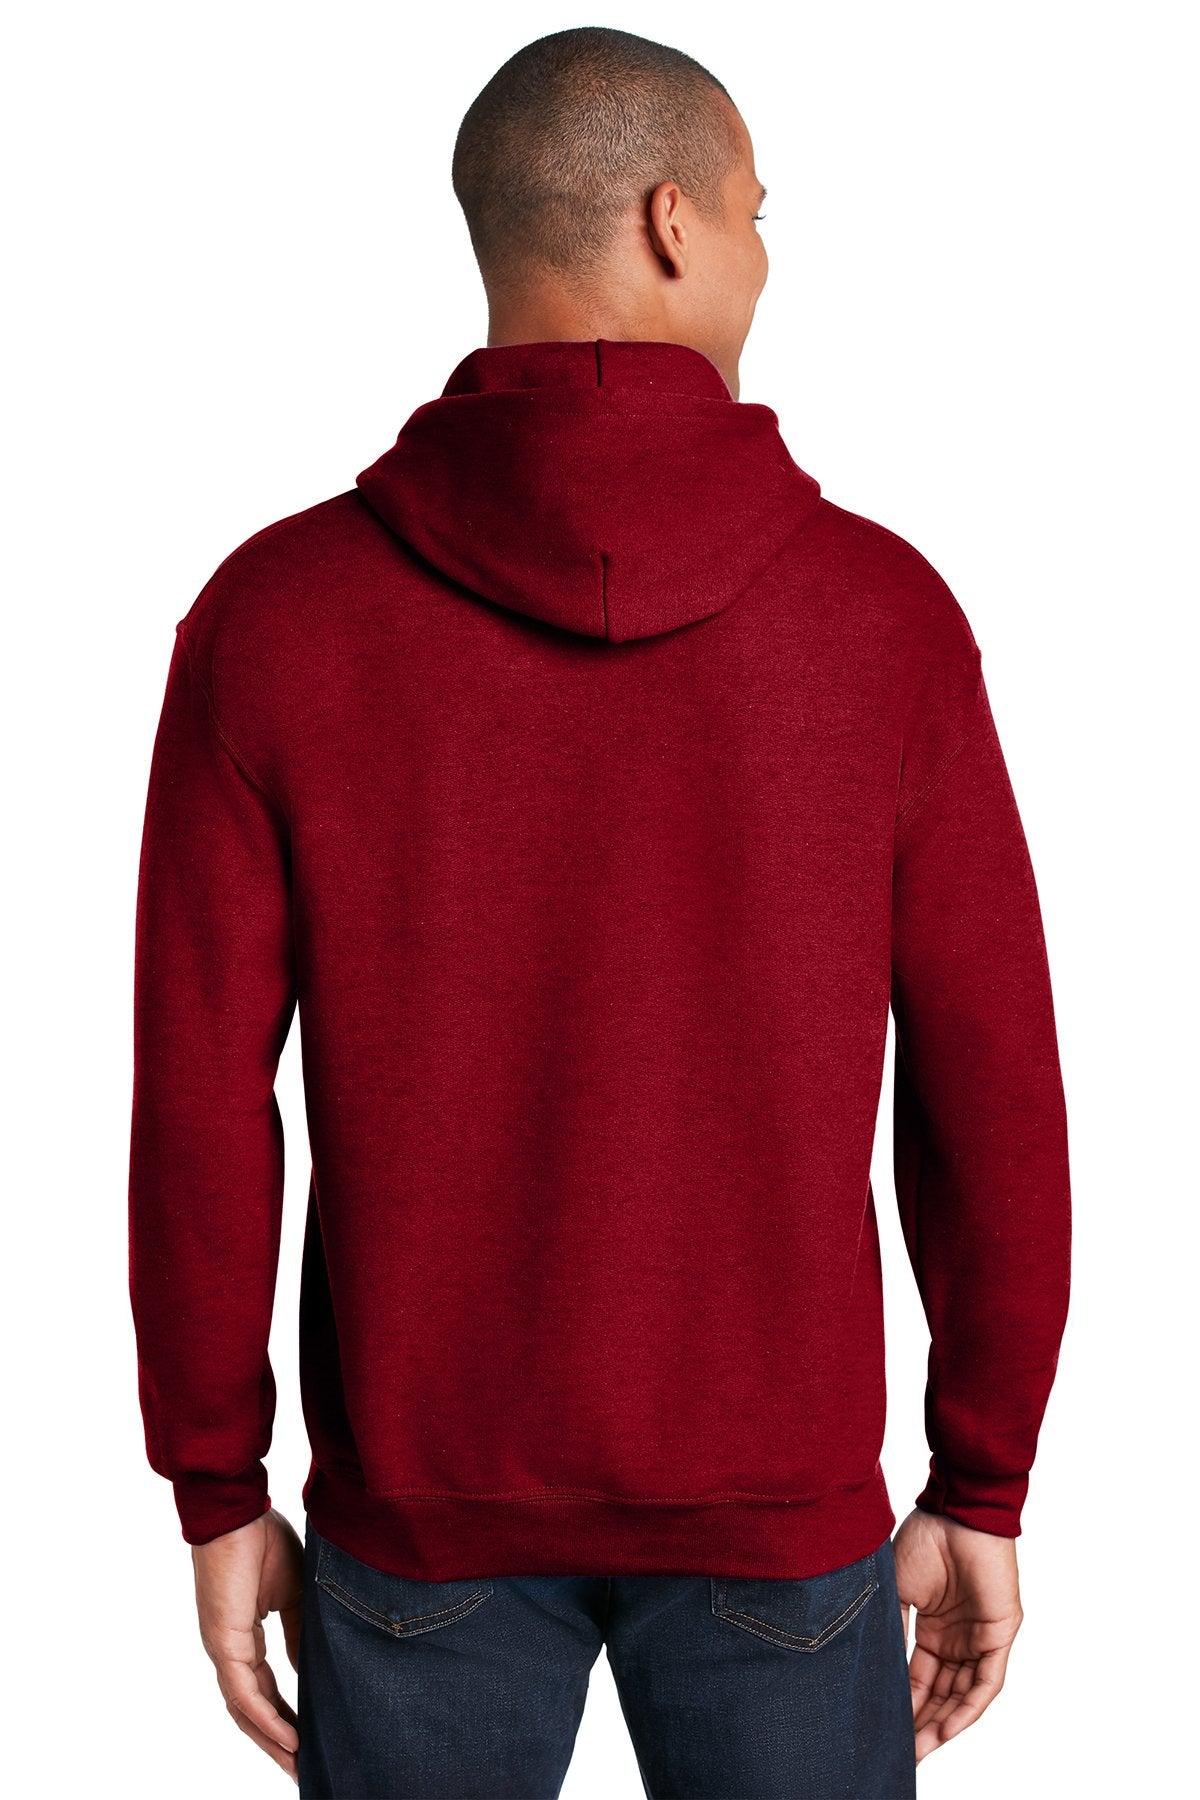 Gildan Heavy Blend Hooded Sweatshirt Antique Cherry Red